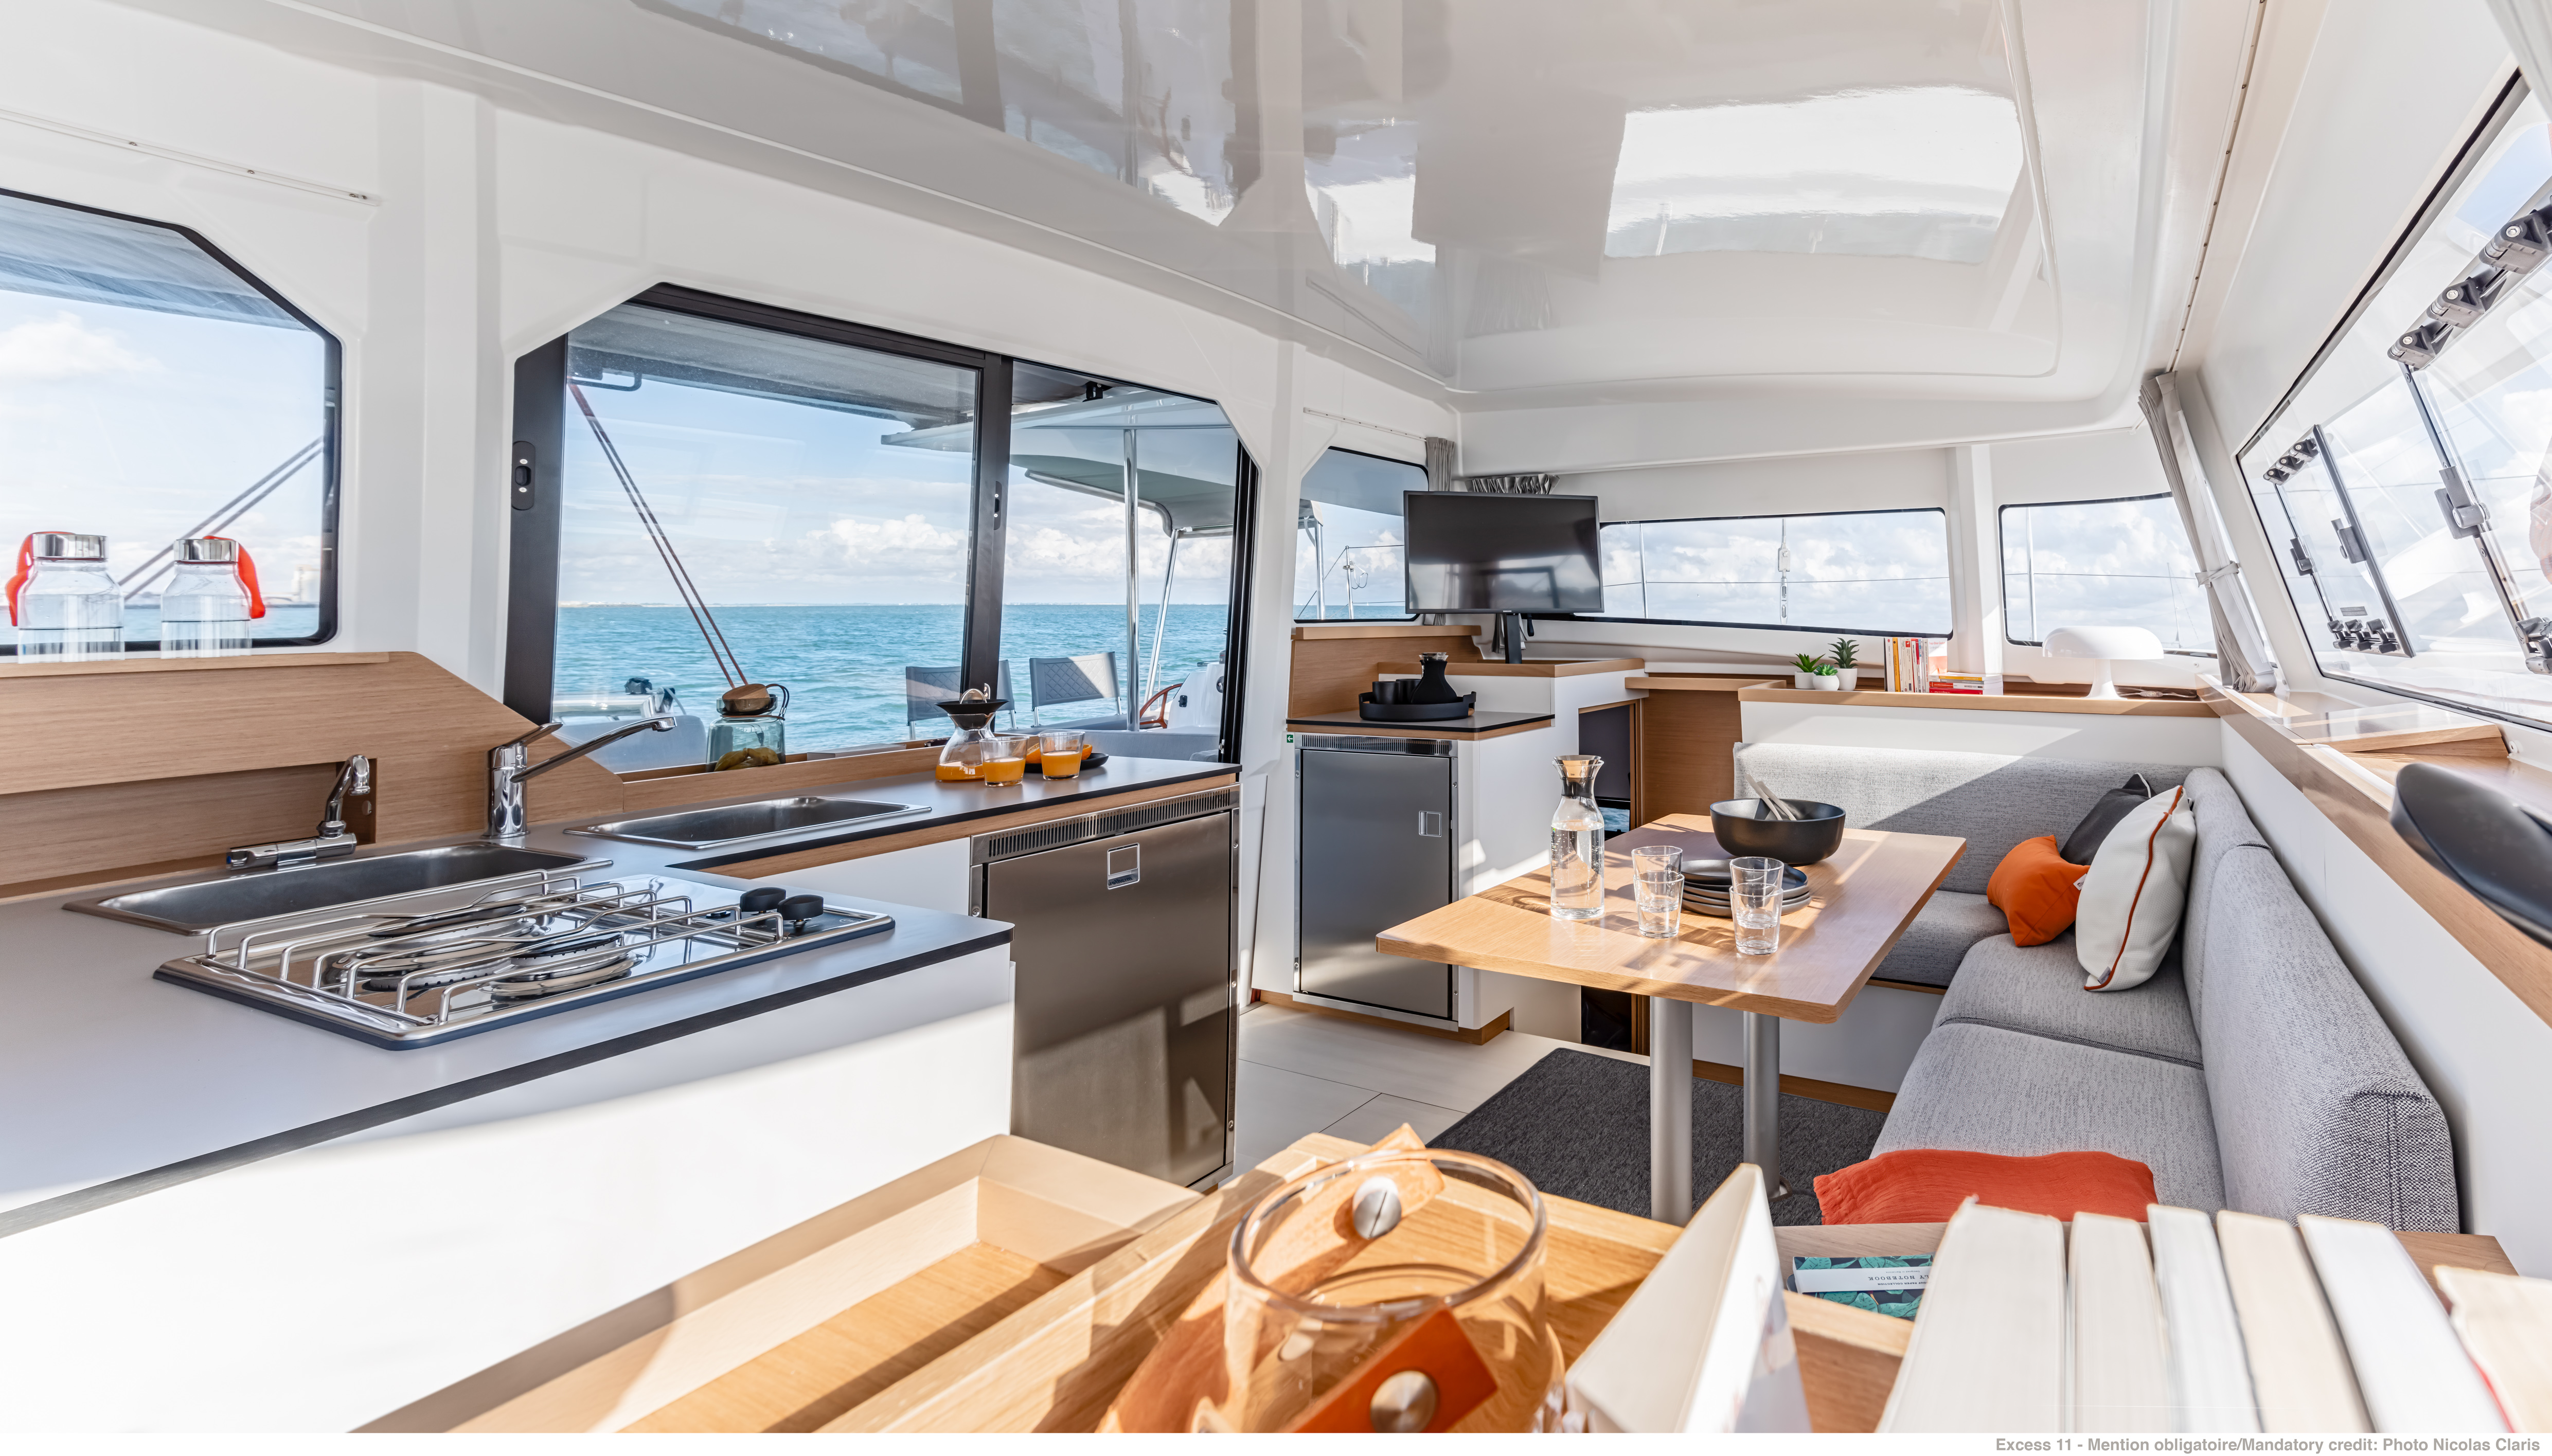 Excess 11 - Luxury yacht charter Balearics & Boat hire in Spain Balearic Islands Ibiza and Formentera Ibiza Ibiza Playa de Talamanca 3